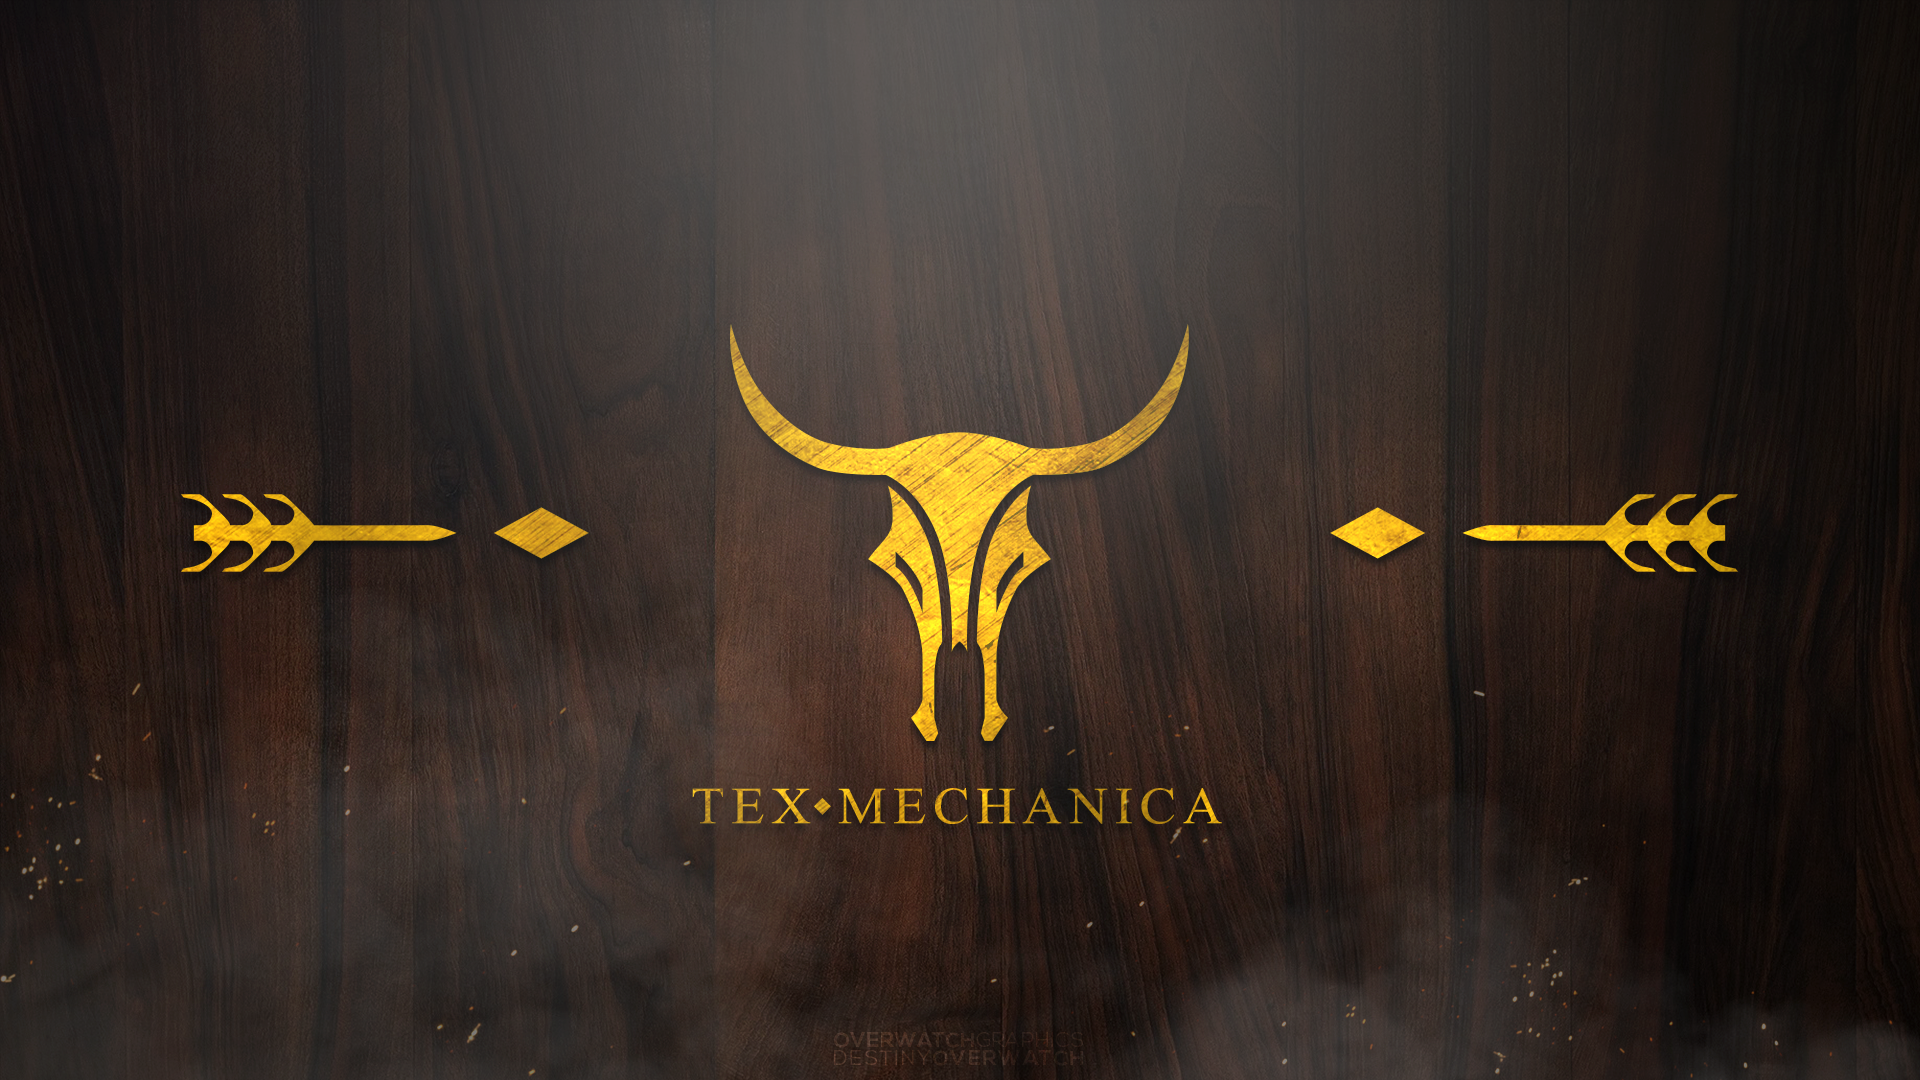 Destiny - Tex Mechanica Wallpaper (Dust) by OverwatchGraphics on ...